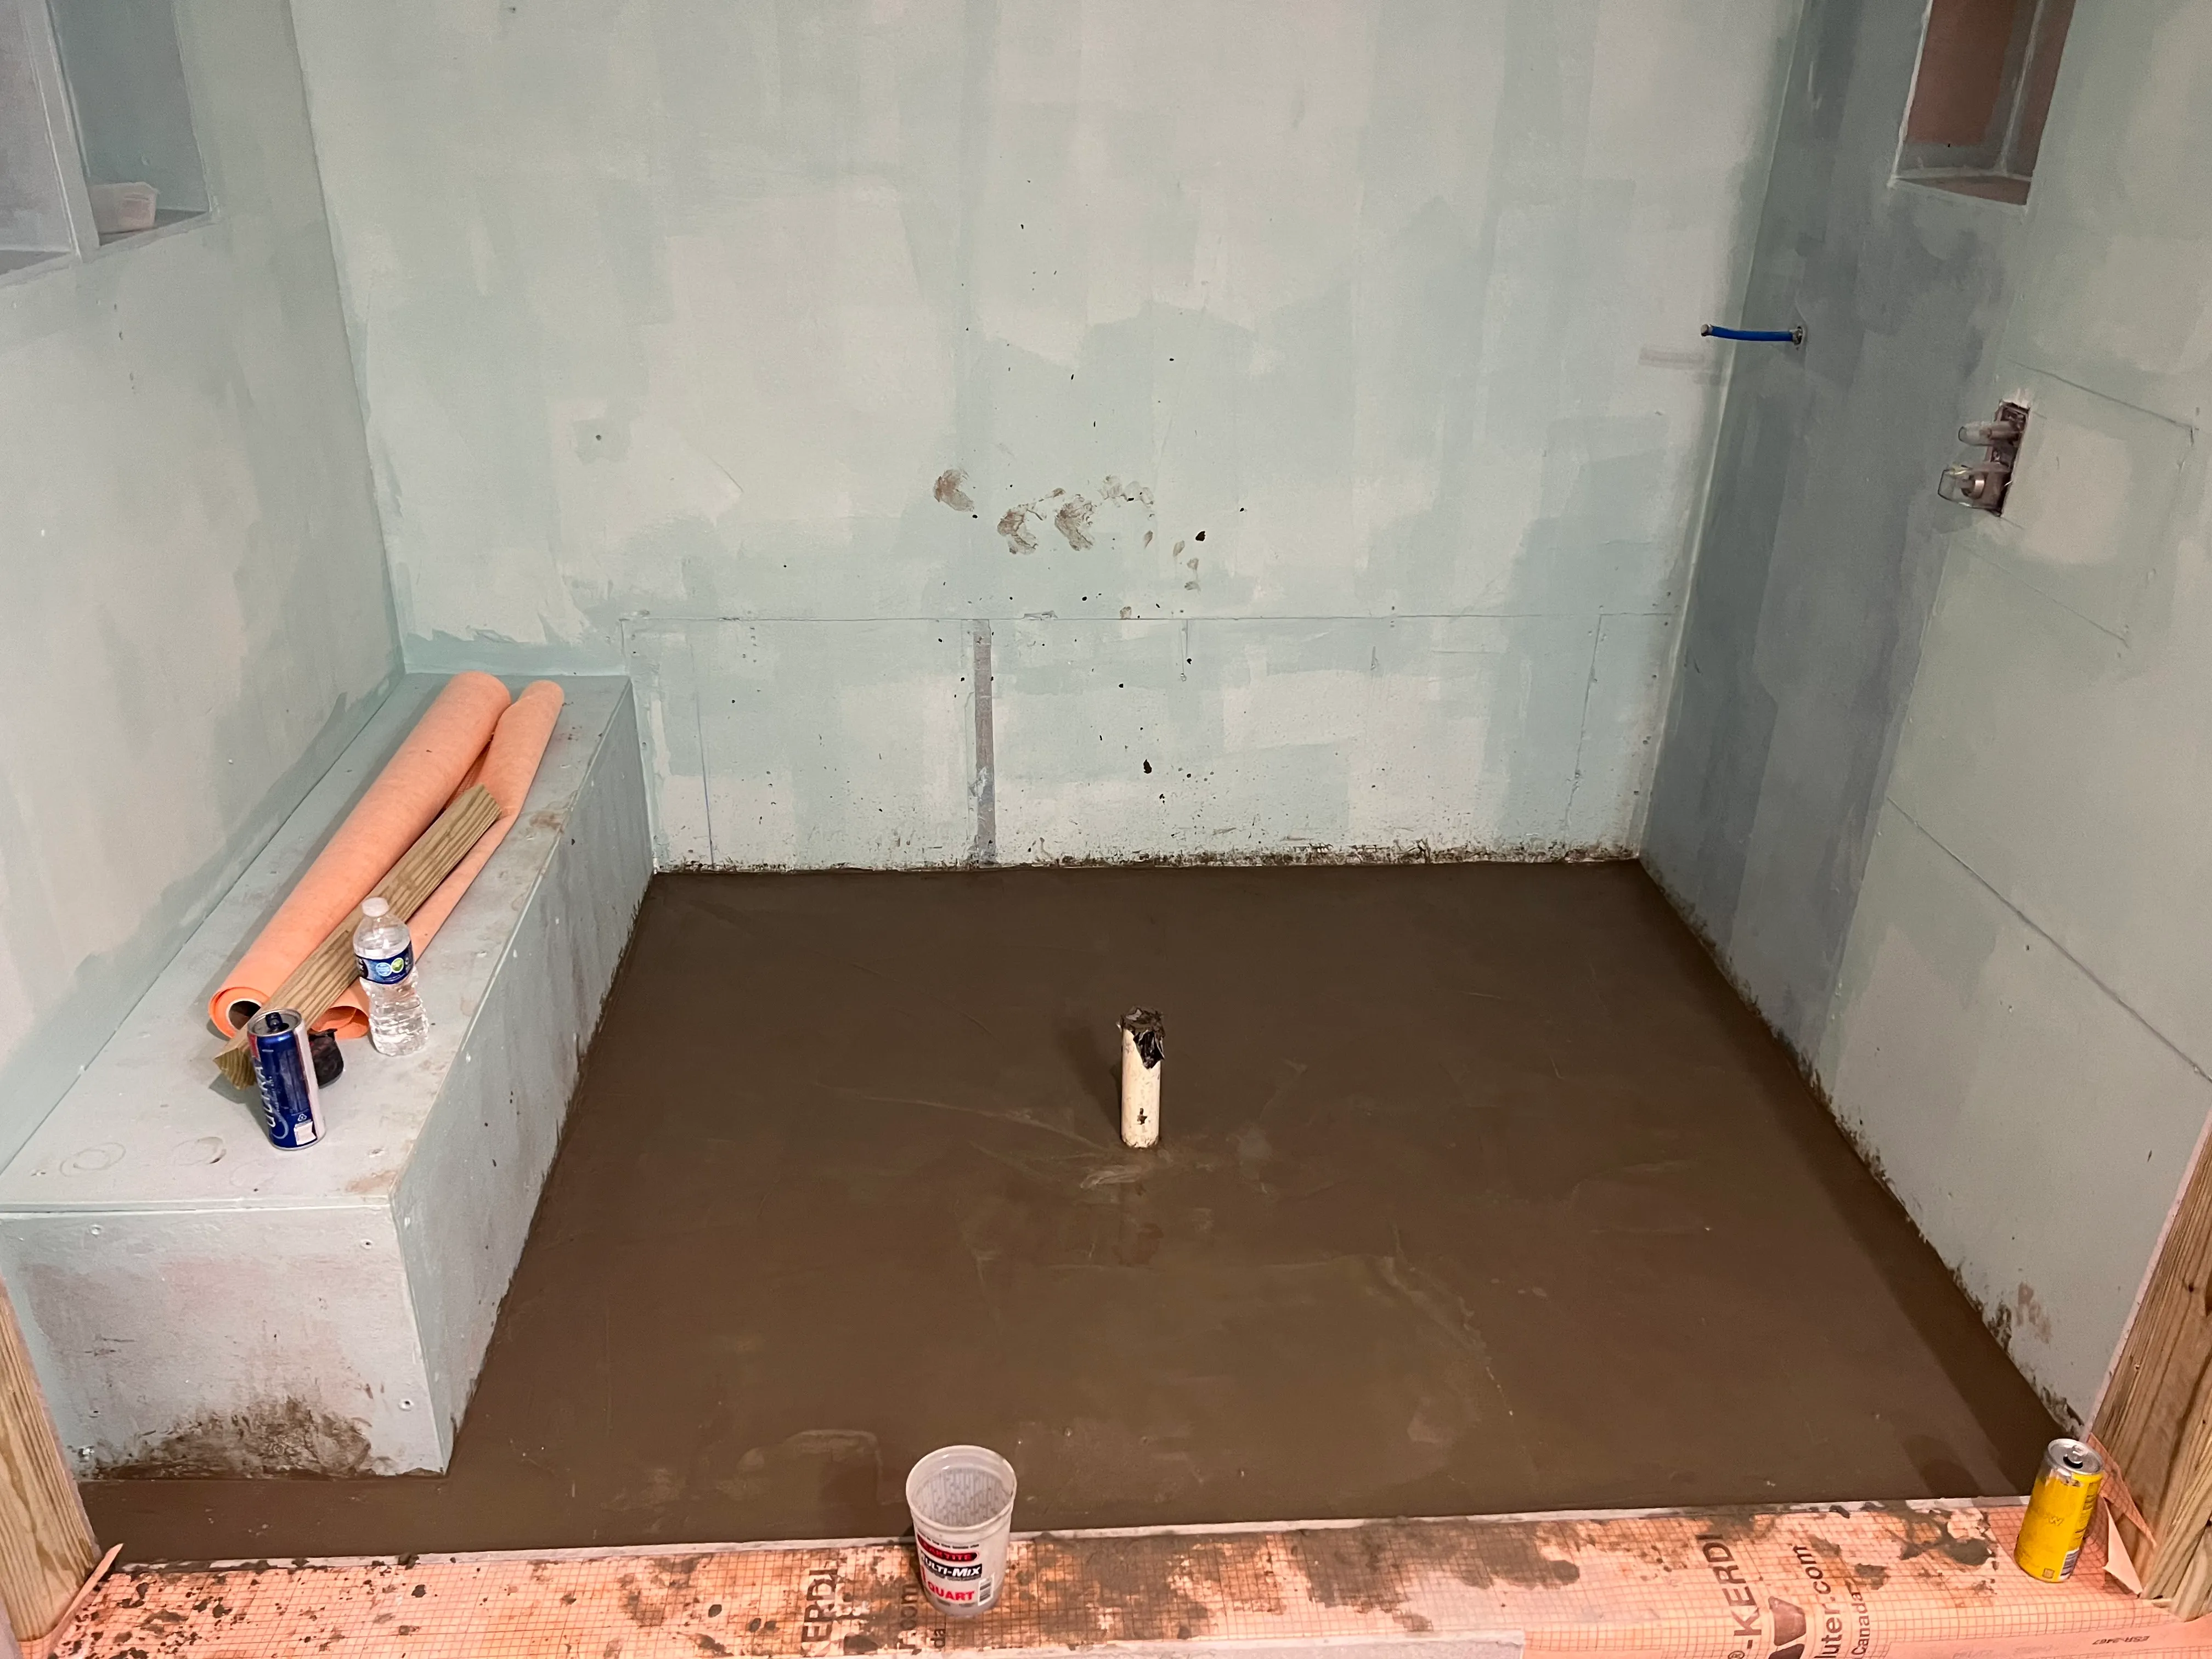 Bathroom Renovation for TECC General Construction  in Harris County, TX